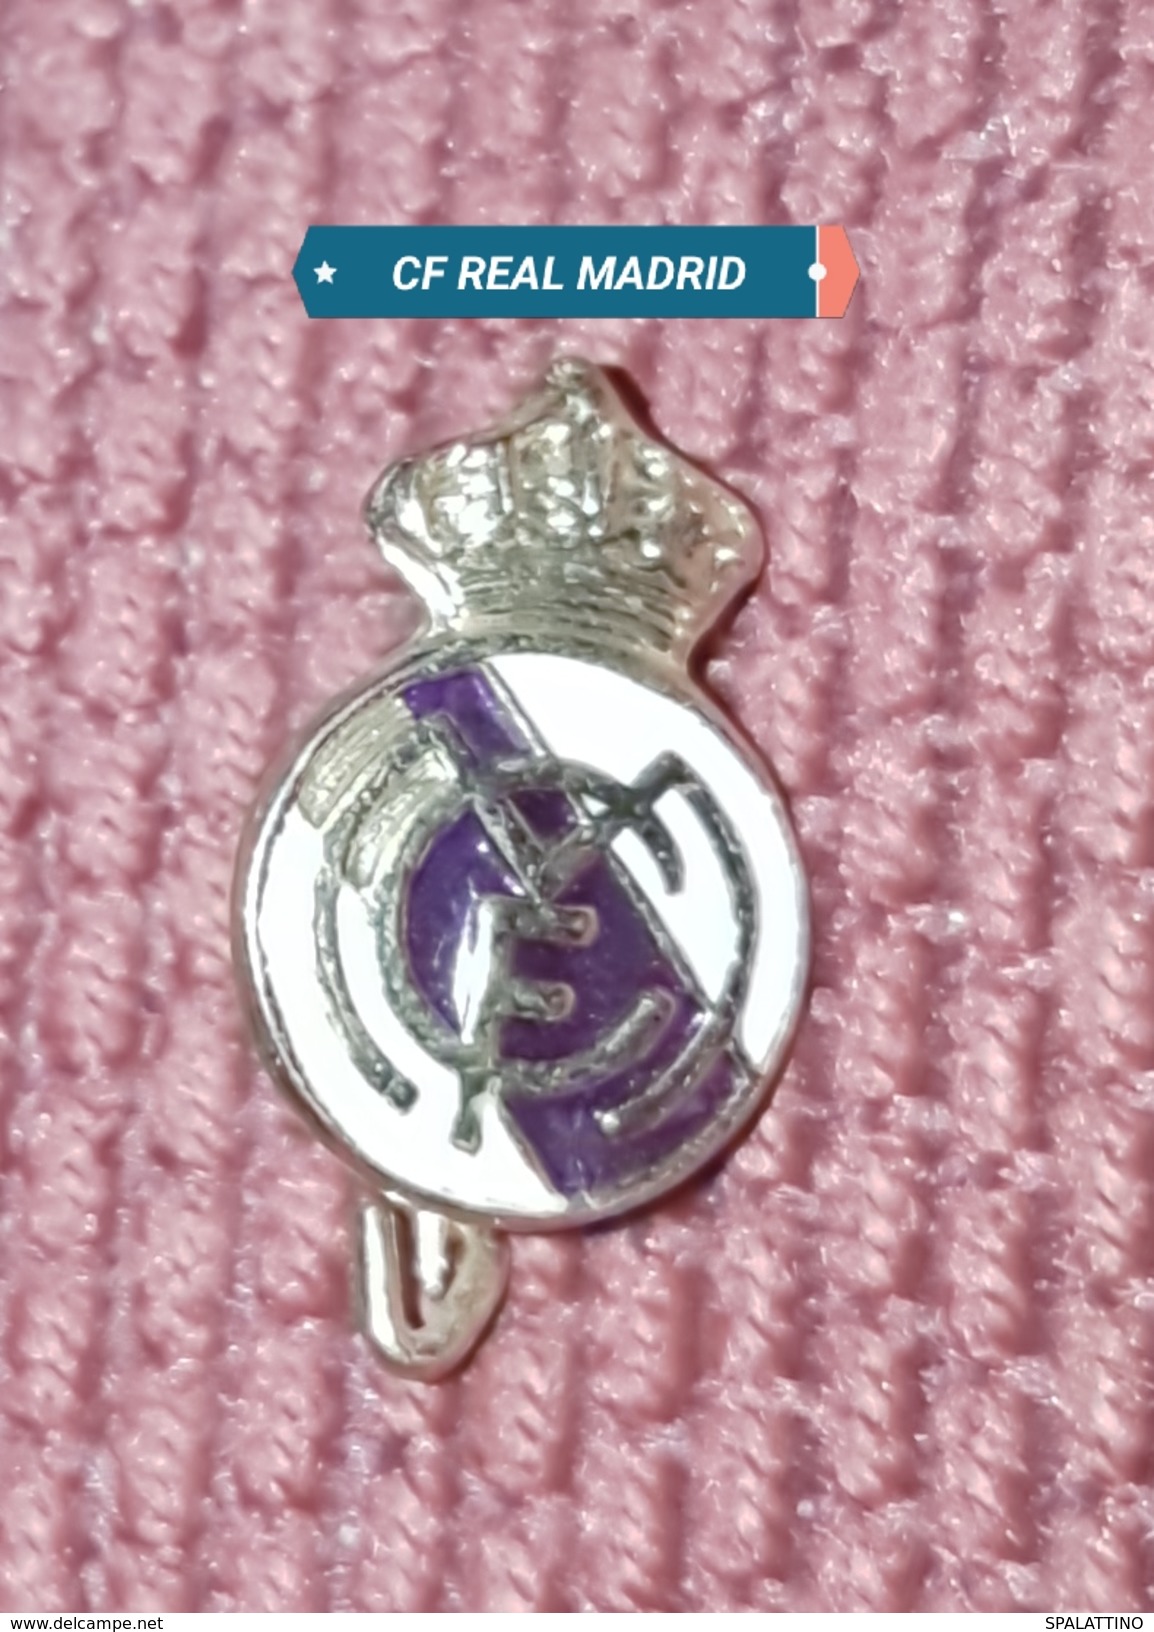 REAL MADRID CF, ORIGINAL PIN, BADGE, SPAIN ESPAÑA, RONALDO - Fútbol